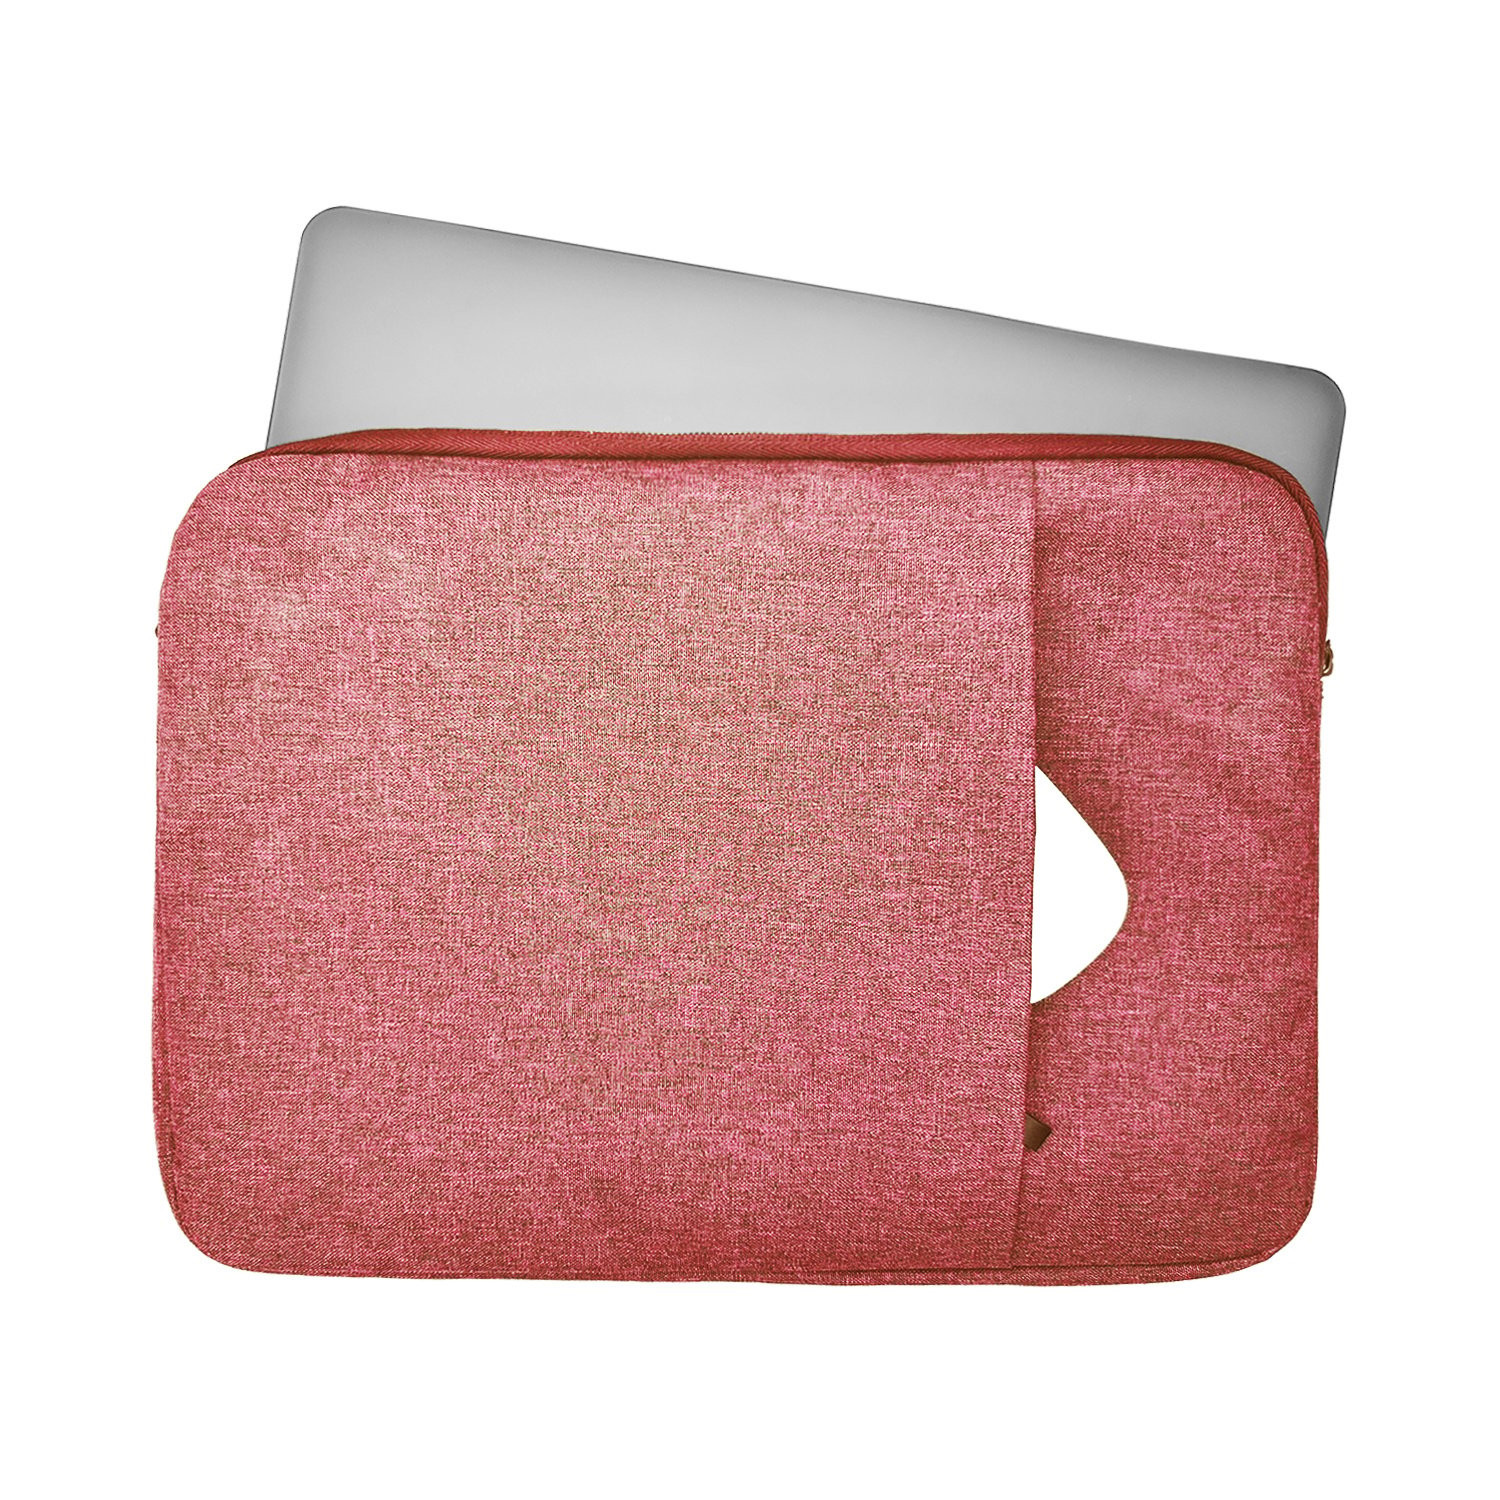 Lunso - Stijlvolle zachte neopreen sleeve hoes 15 inch - Roze